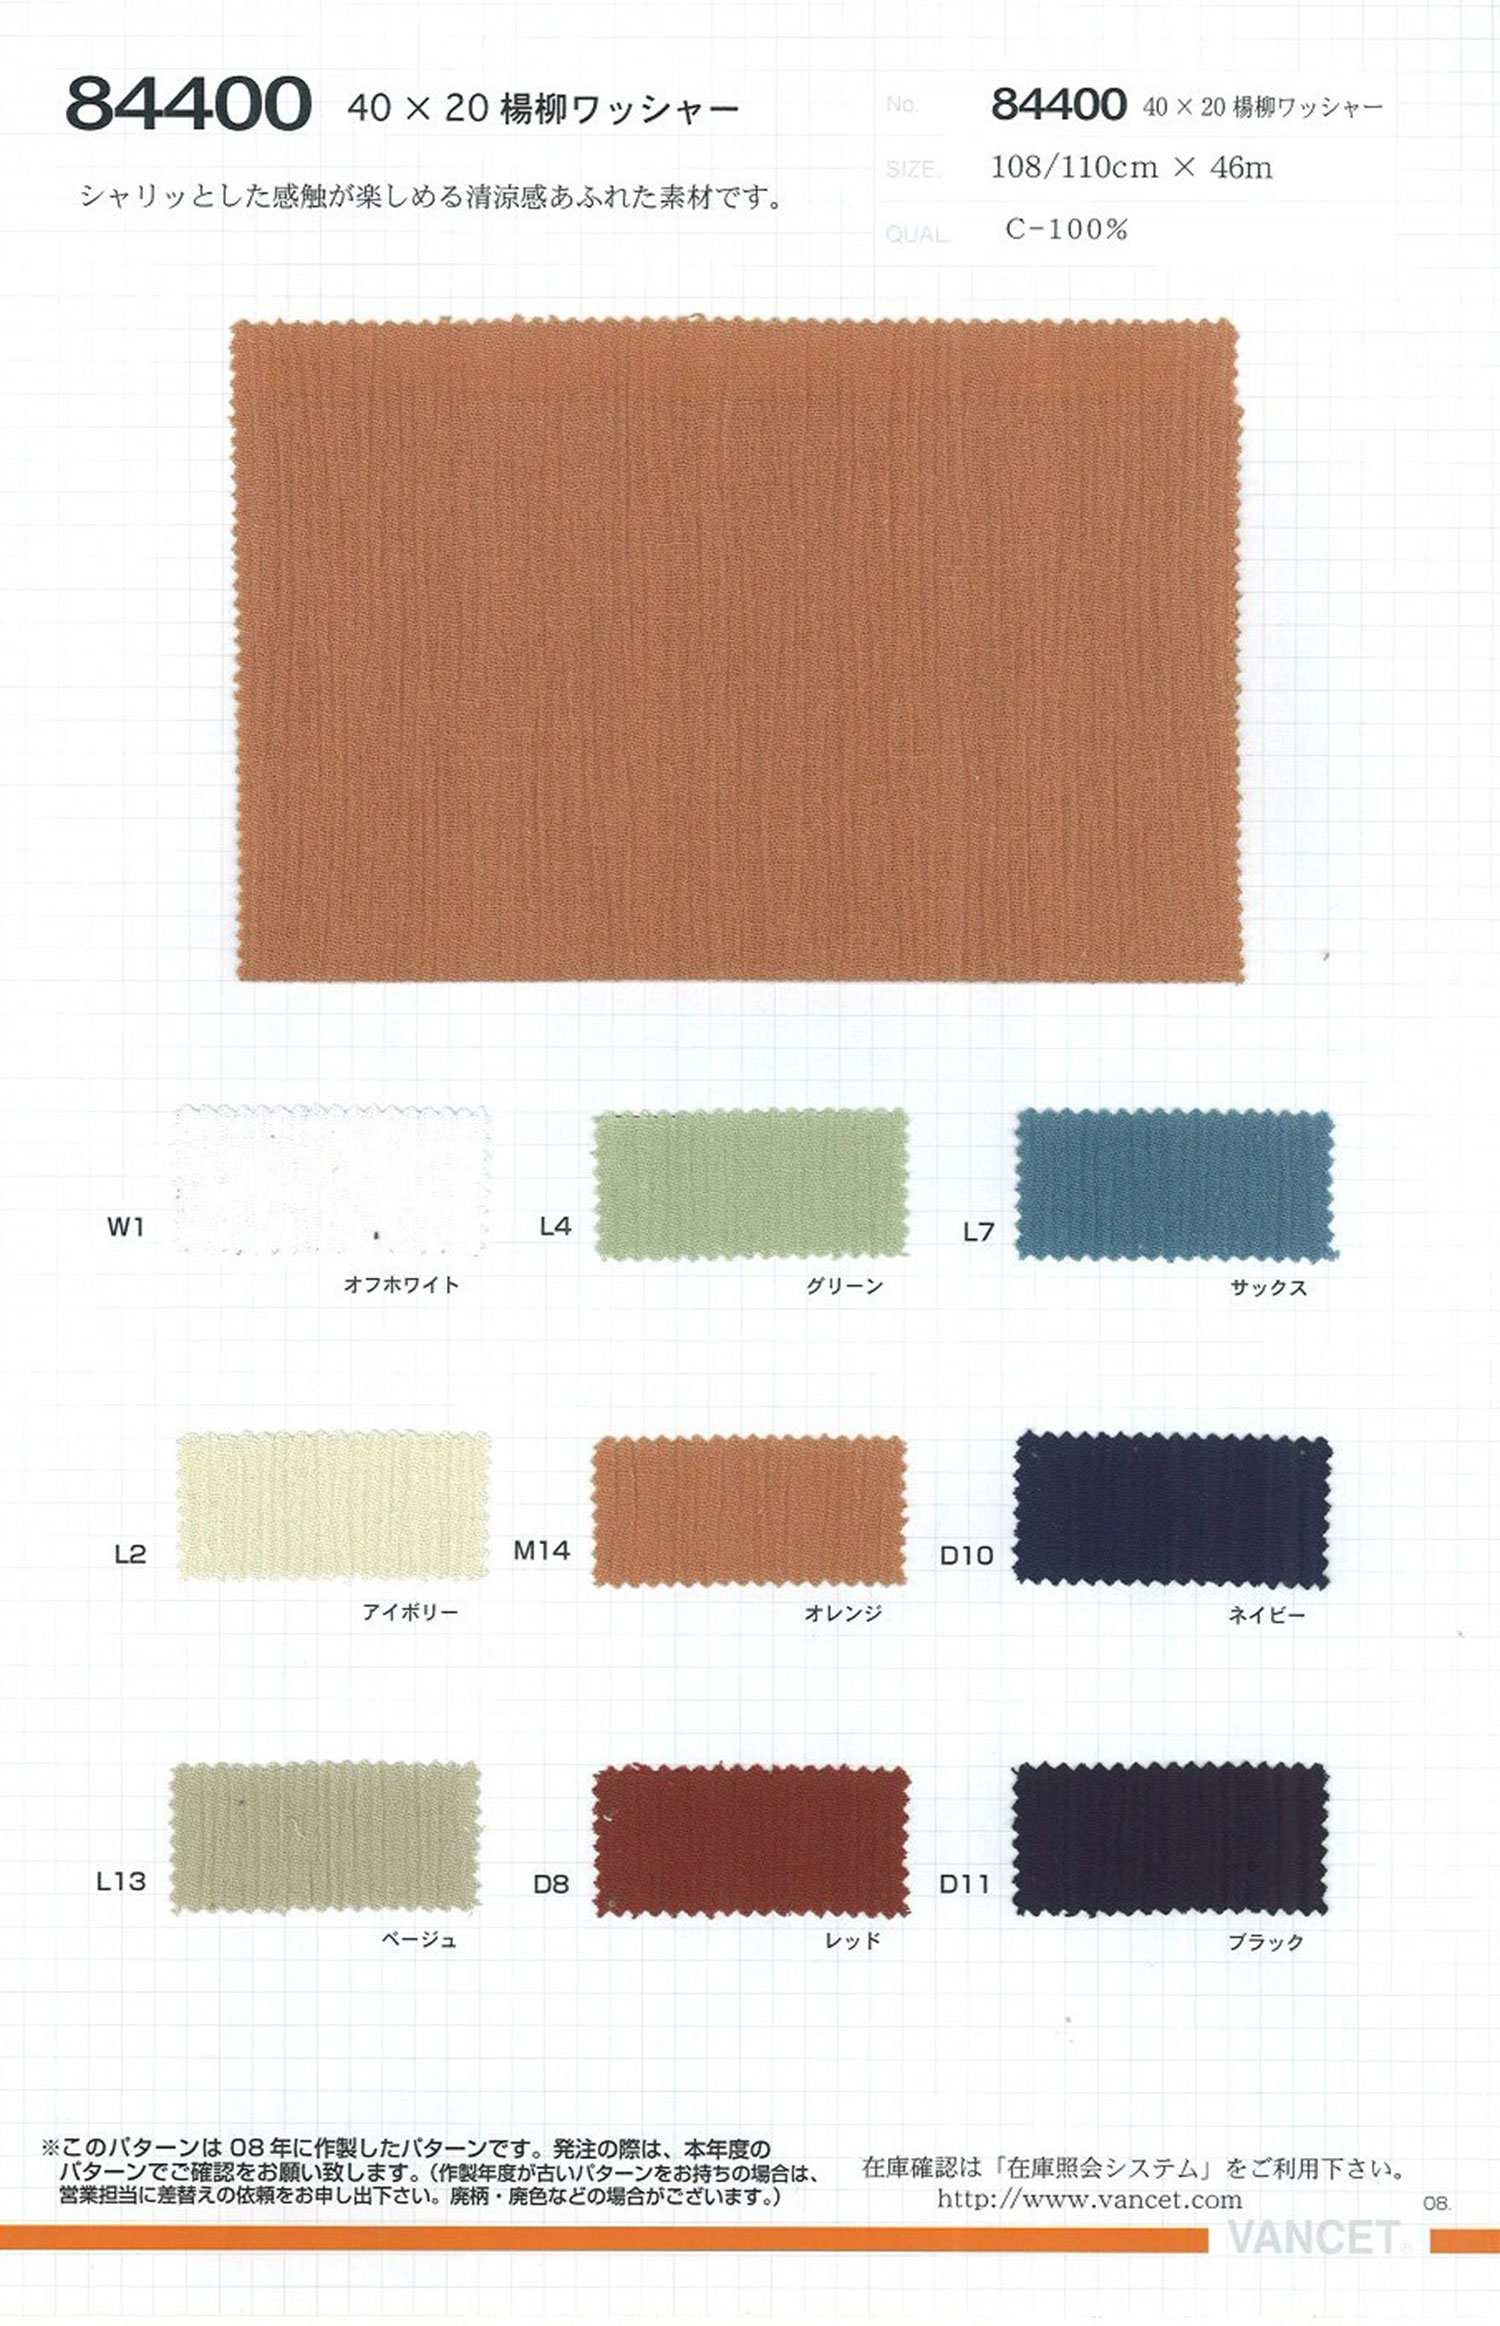 84400 Processamento De Lavadora Yoryu (Crepe Enrugado) 40x20[Têxtil / Tecido] VANCET